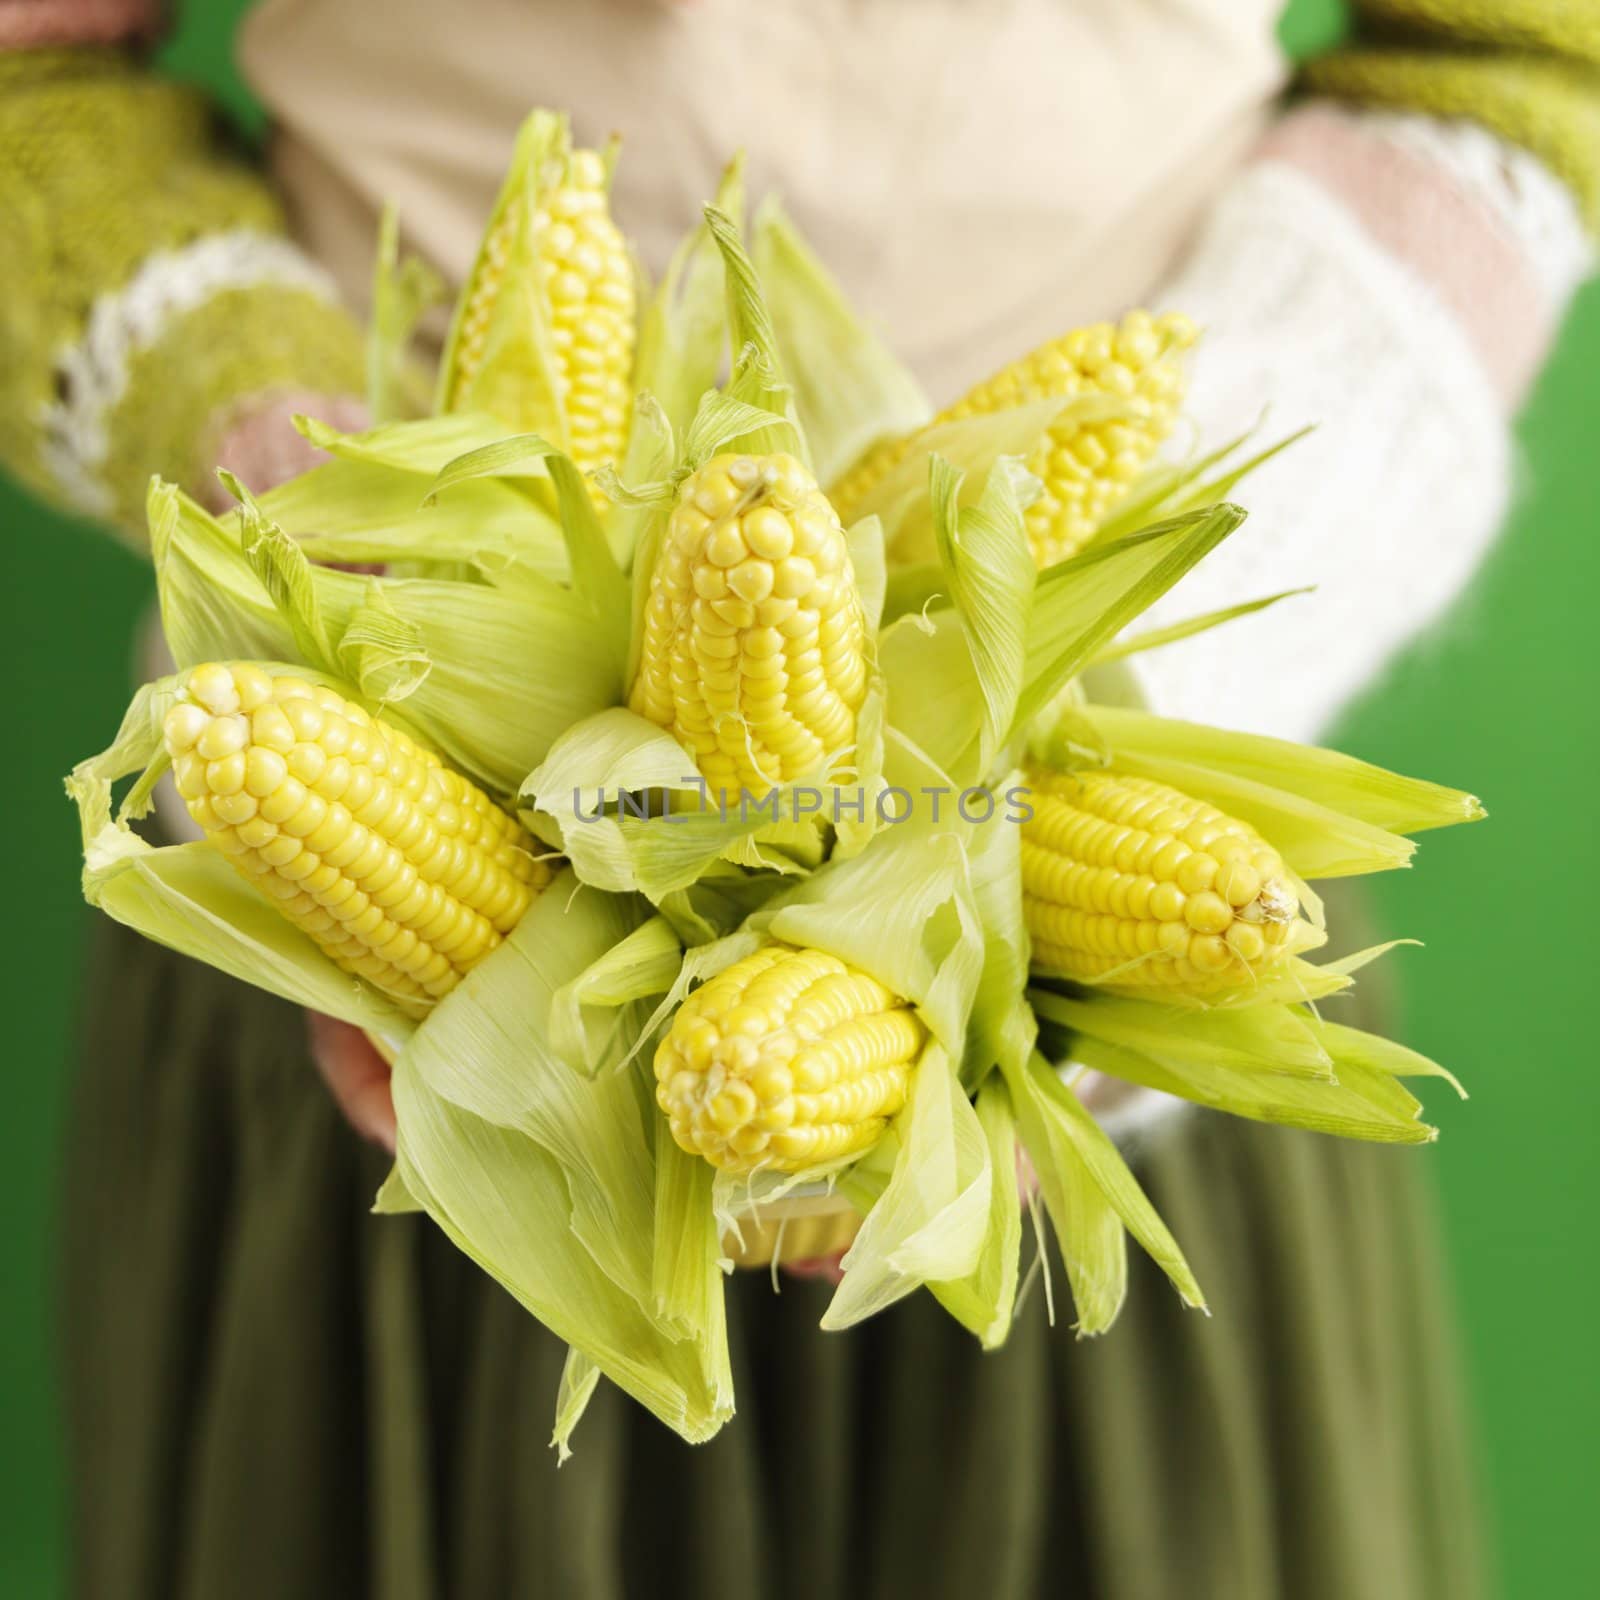 Corn bouquet by iofoto